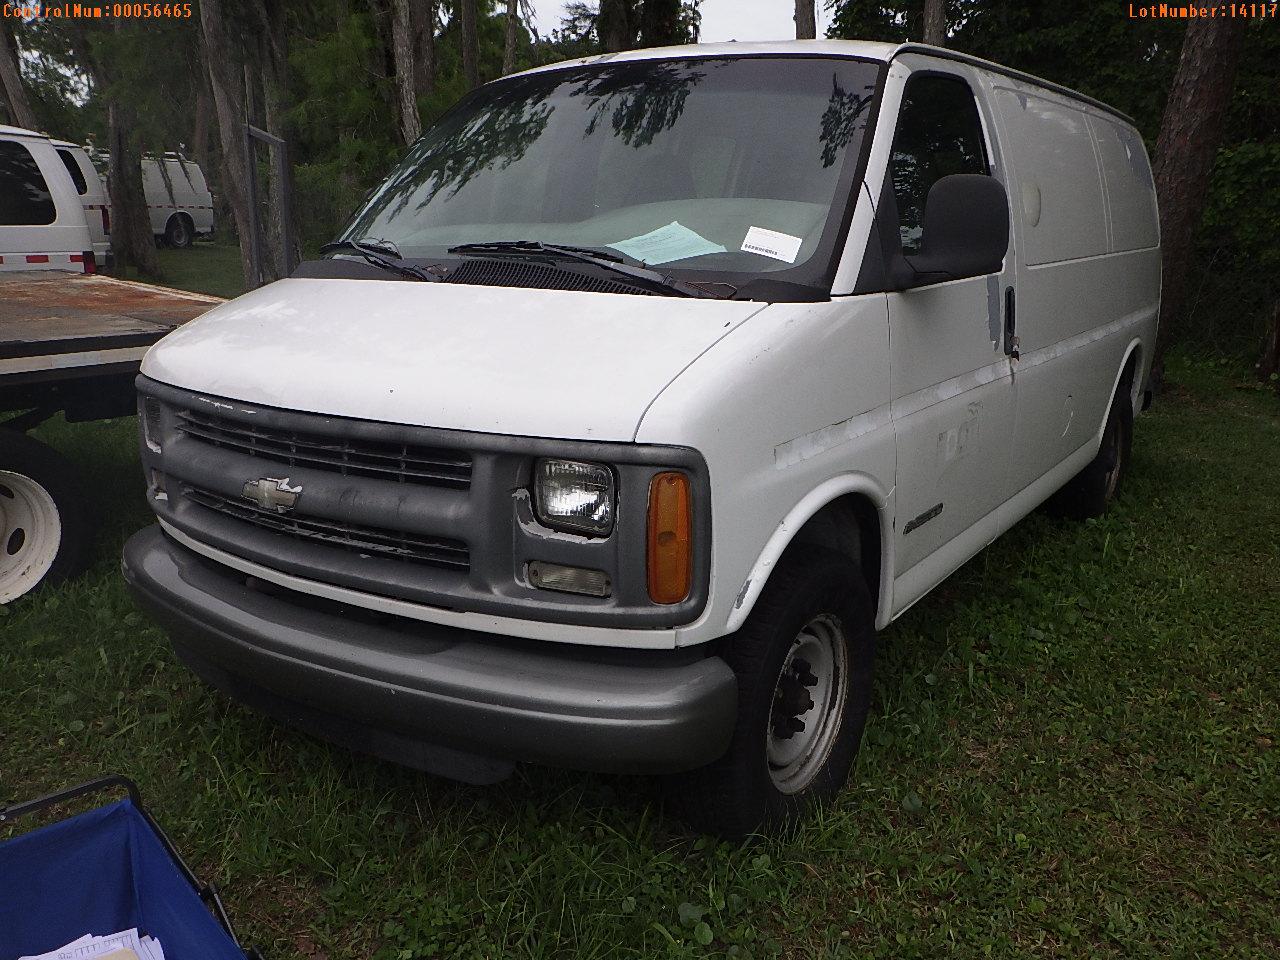 7-15117 (Trucks-Van Cargo)  Seller: Florida State D.O.T. 2001 CHEV 3500